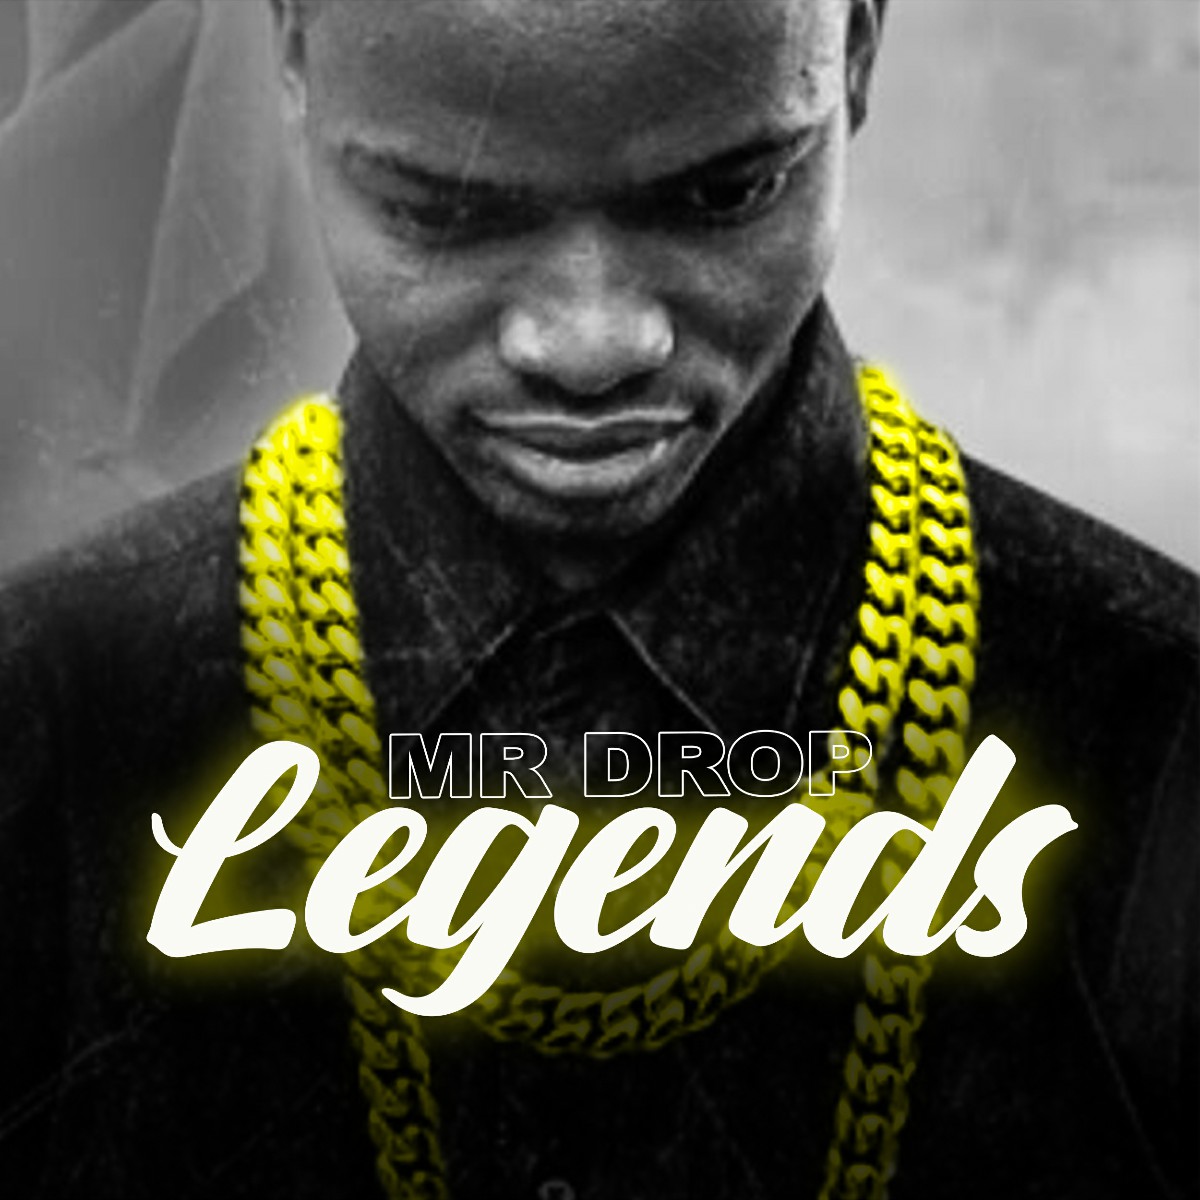 Mr Drop - Legends